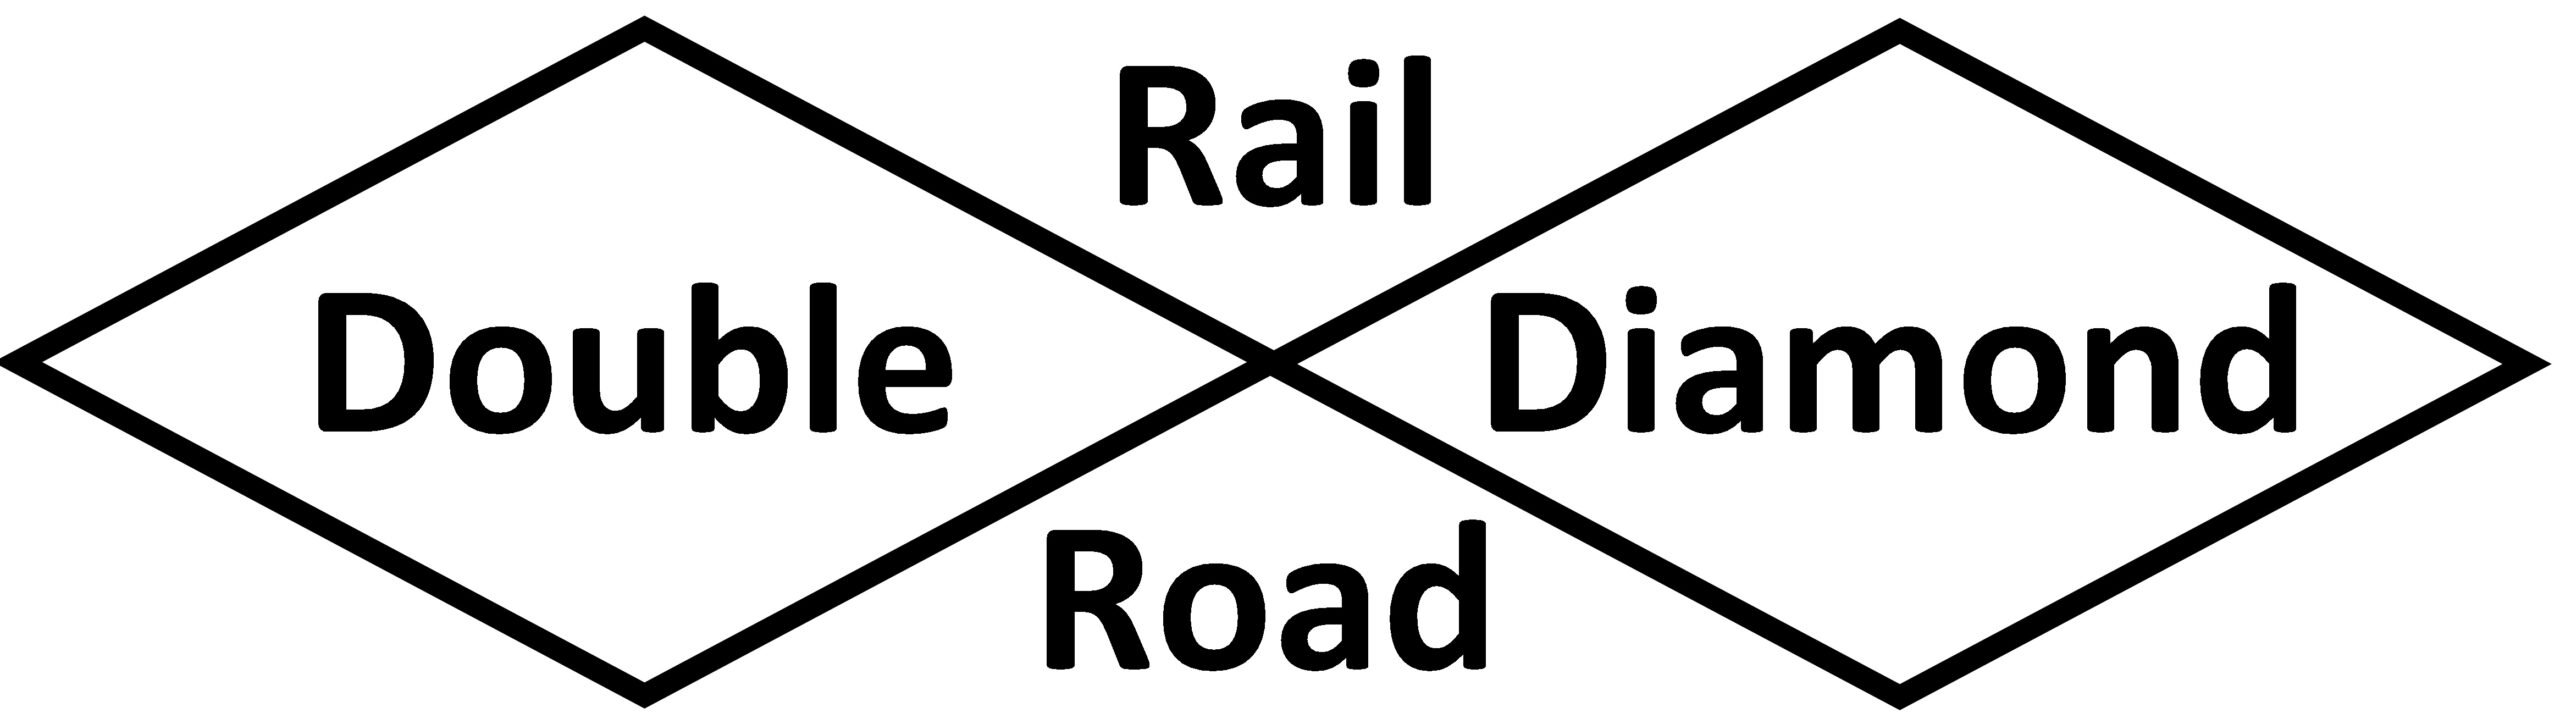 Double Diamond Railroad